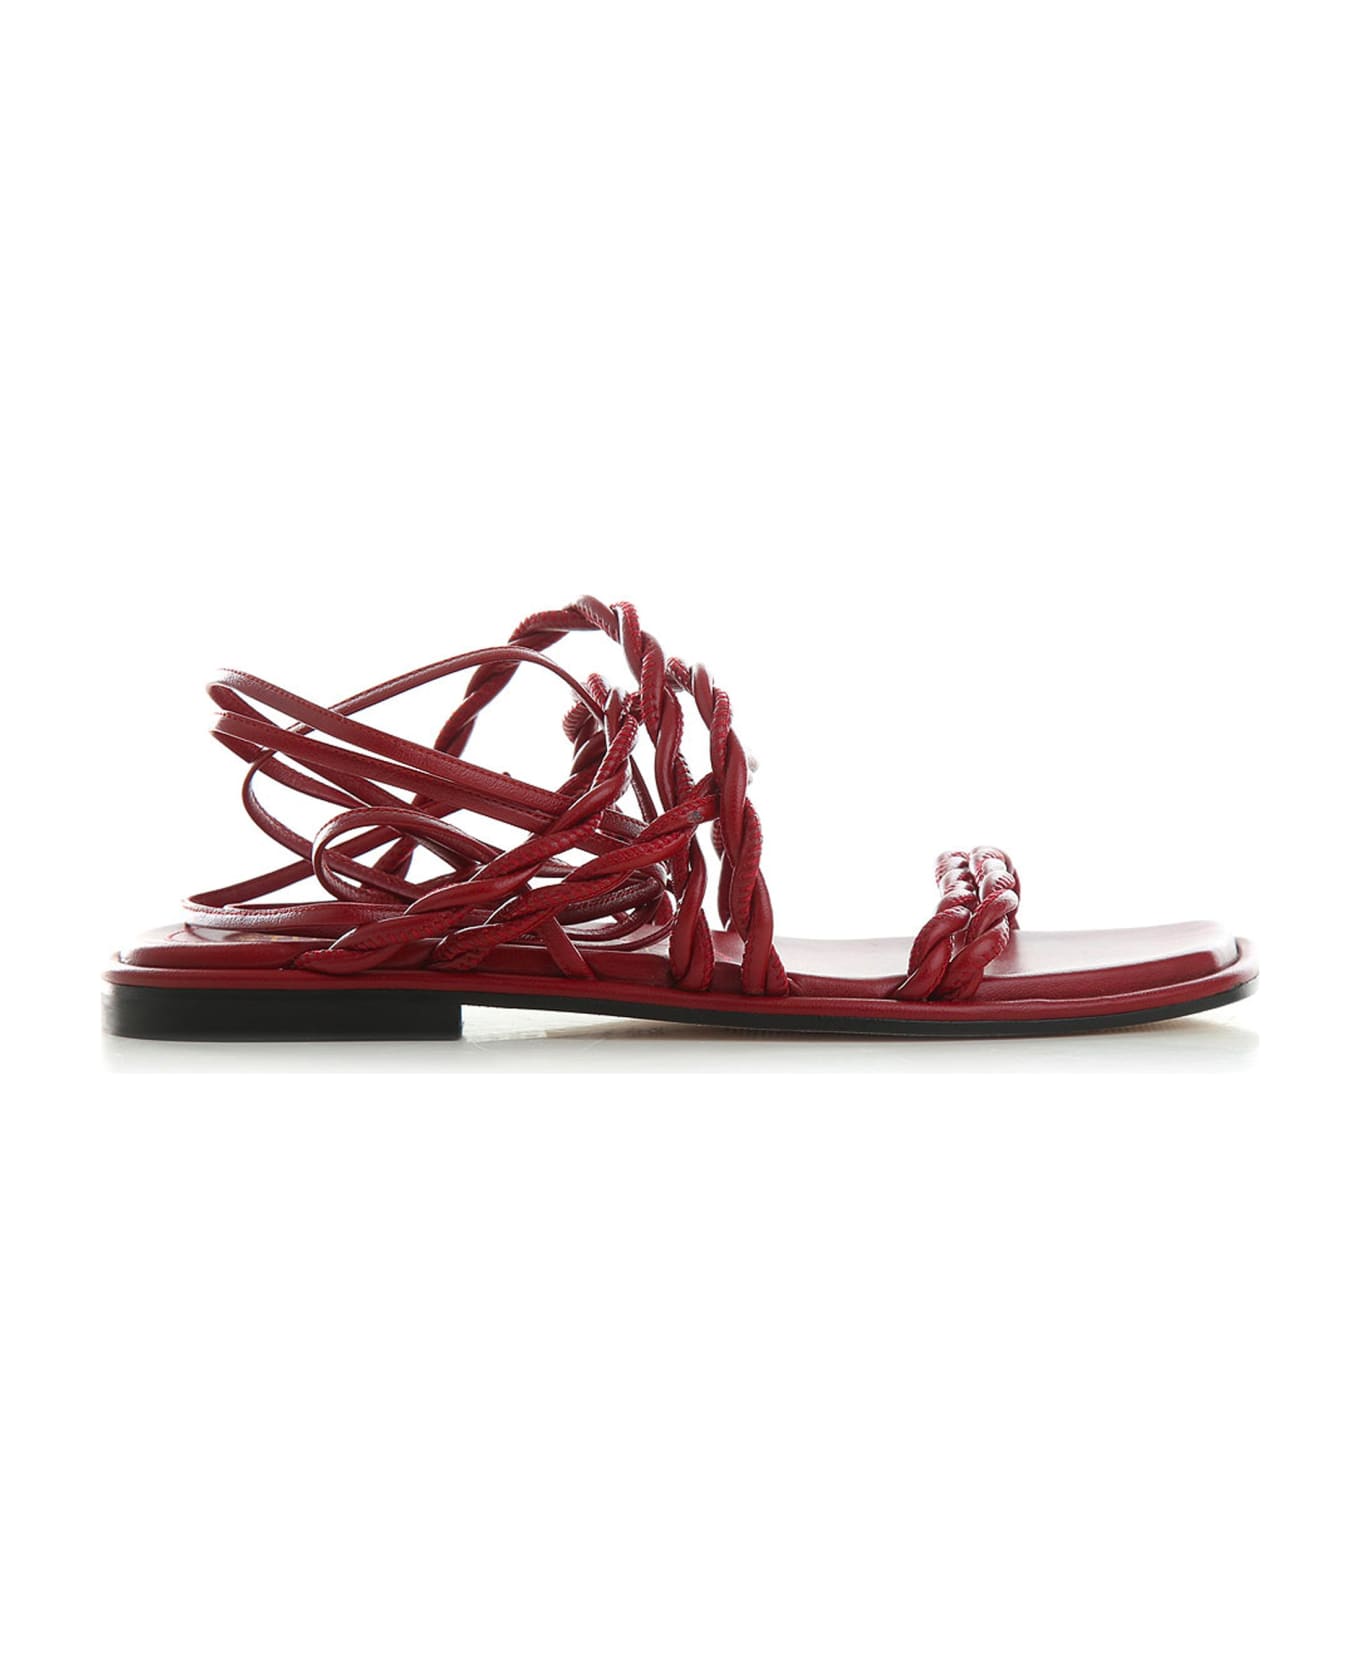 Stuart Weitzman Calypso Gladiator Sandals - Red